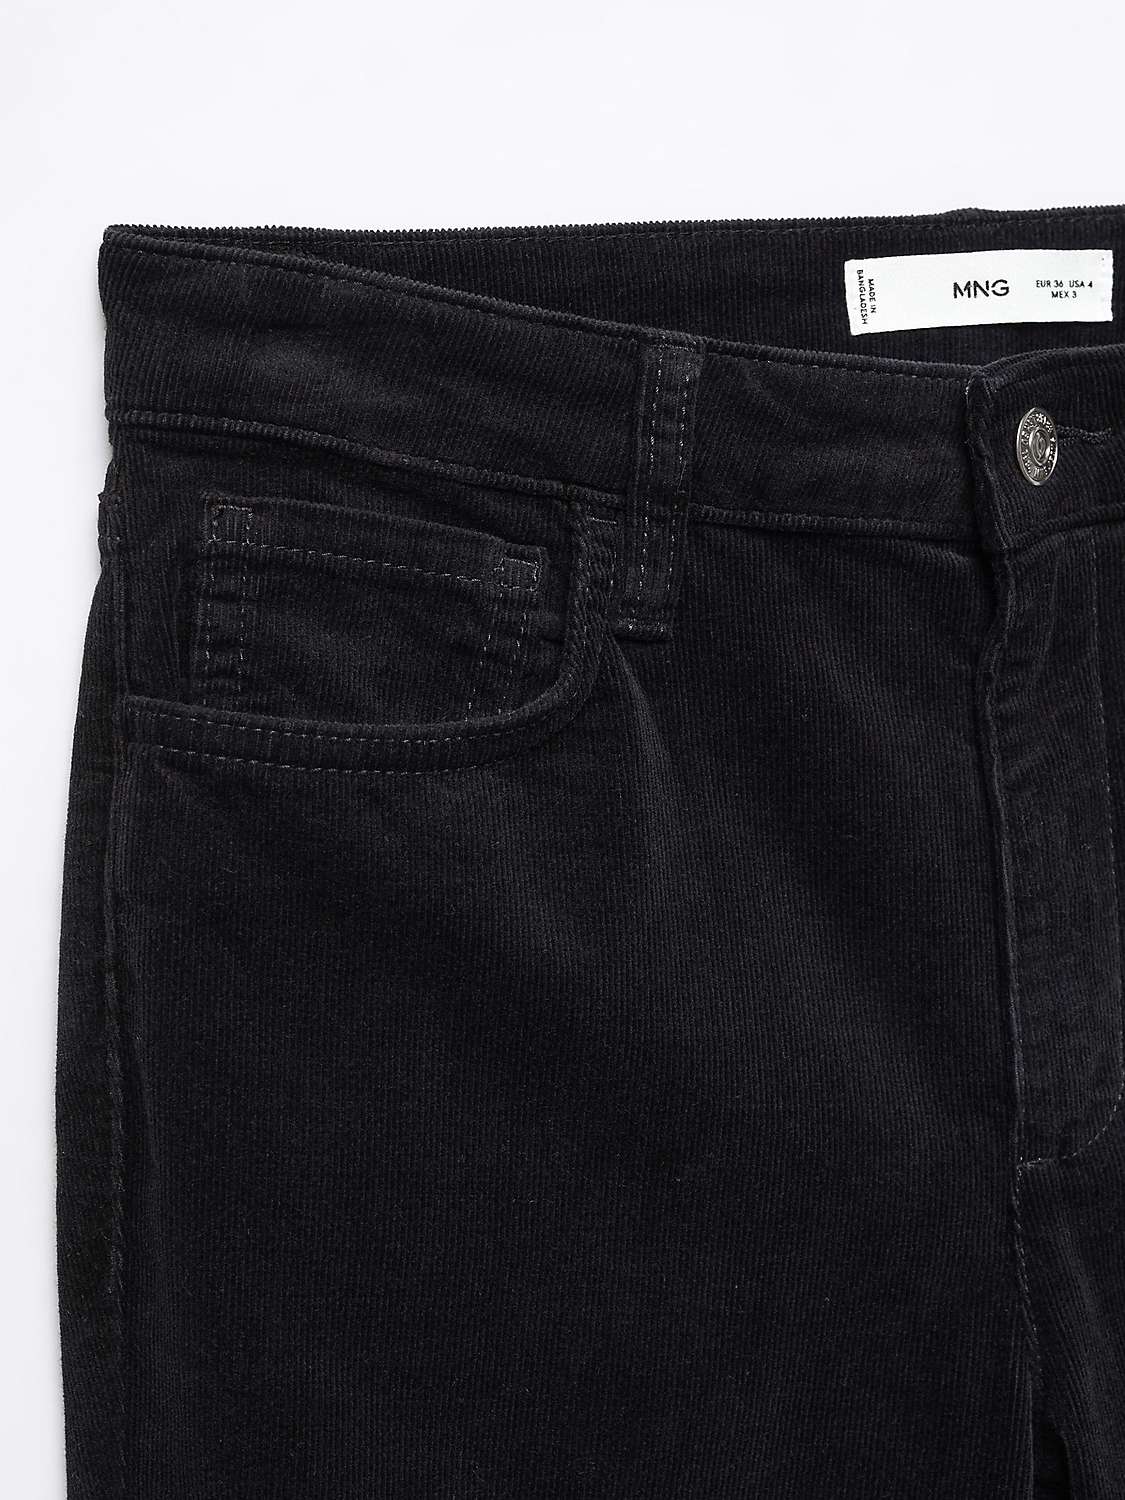 Mango Crop Flared Jeans, Black at John Lewis & Partners